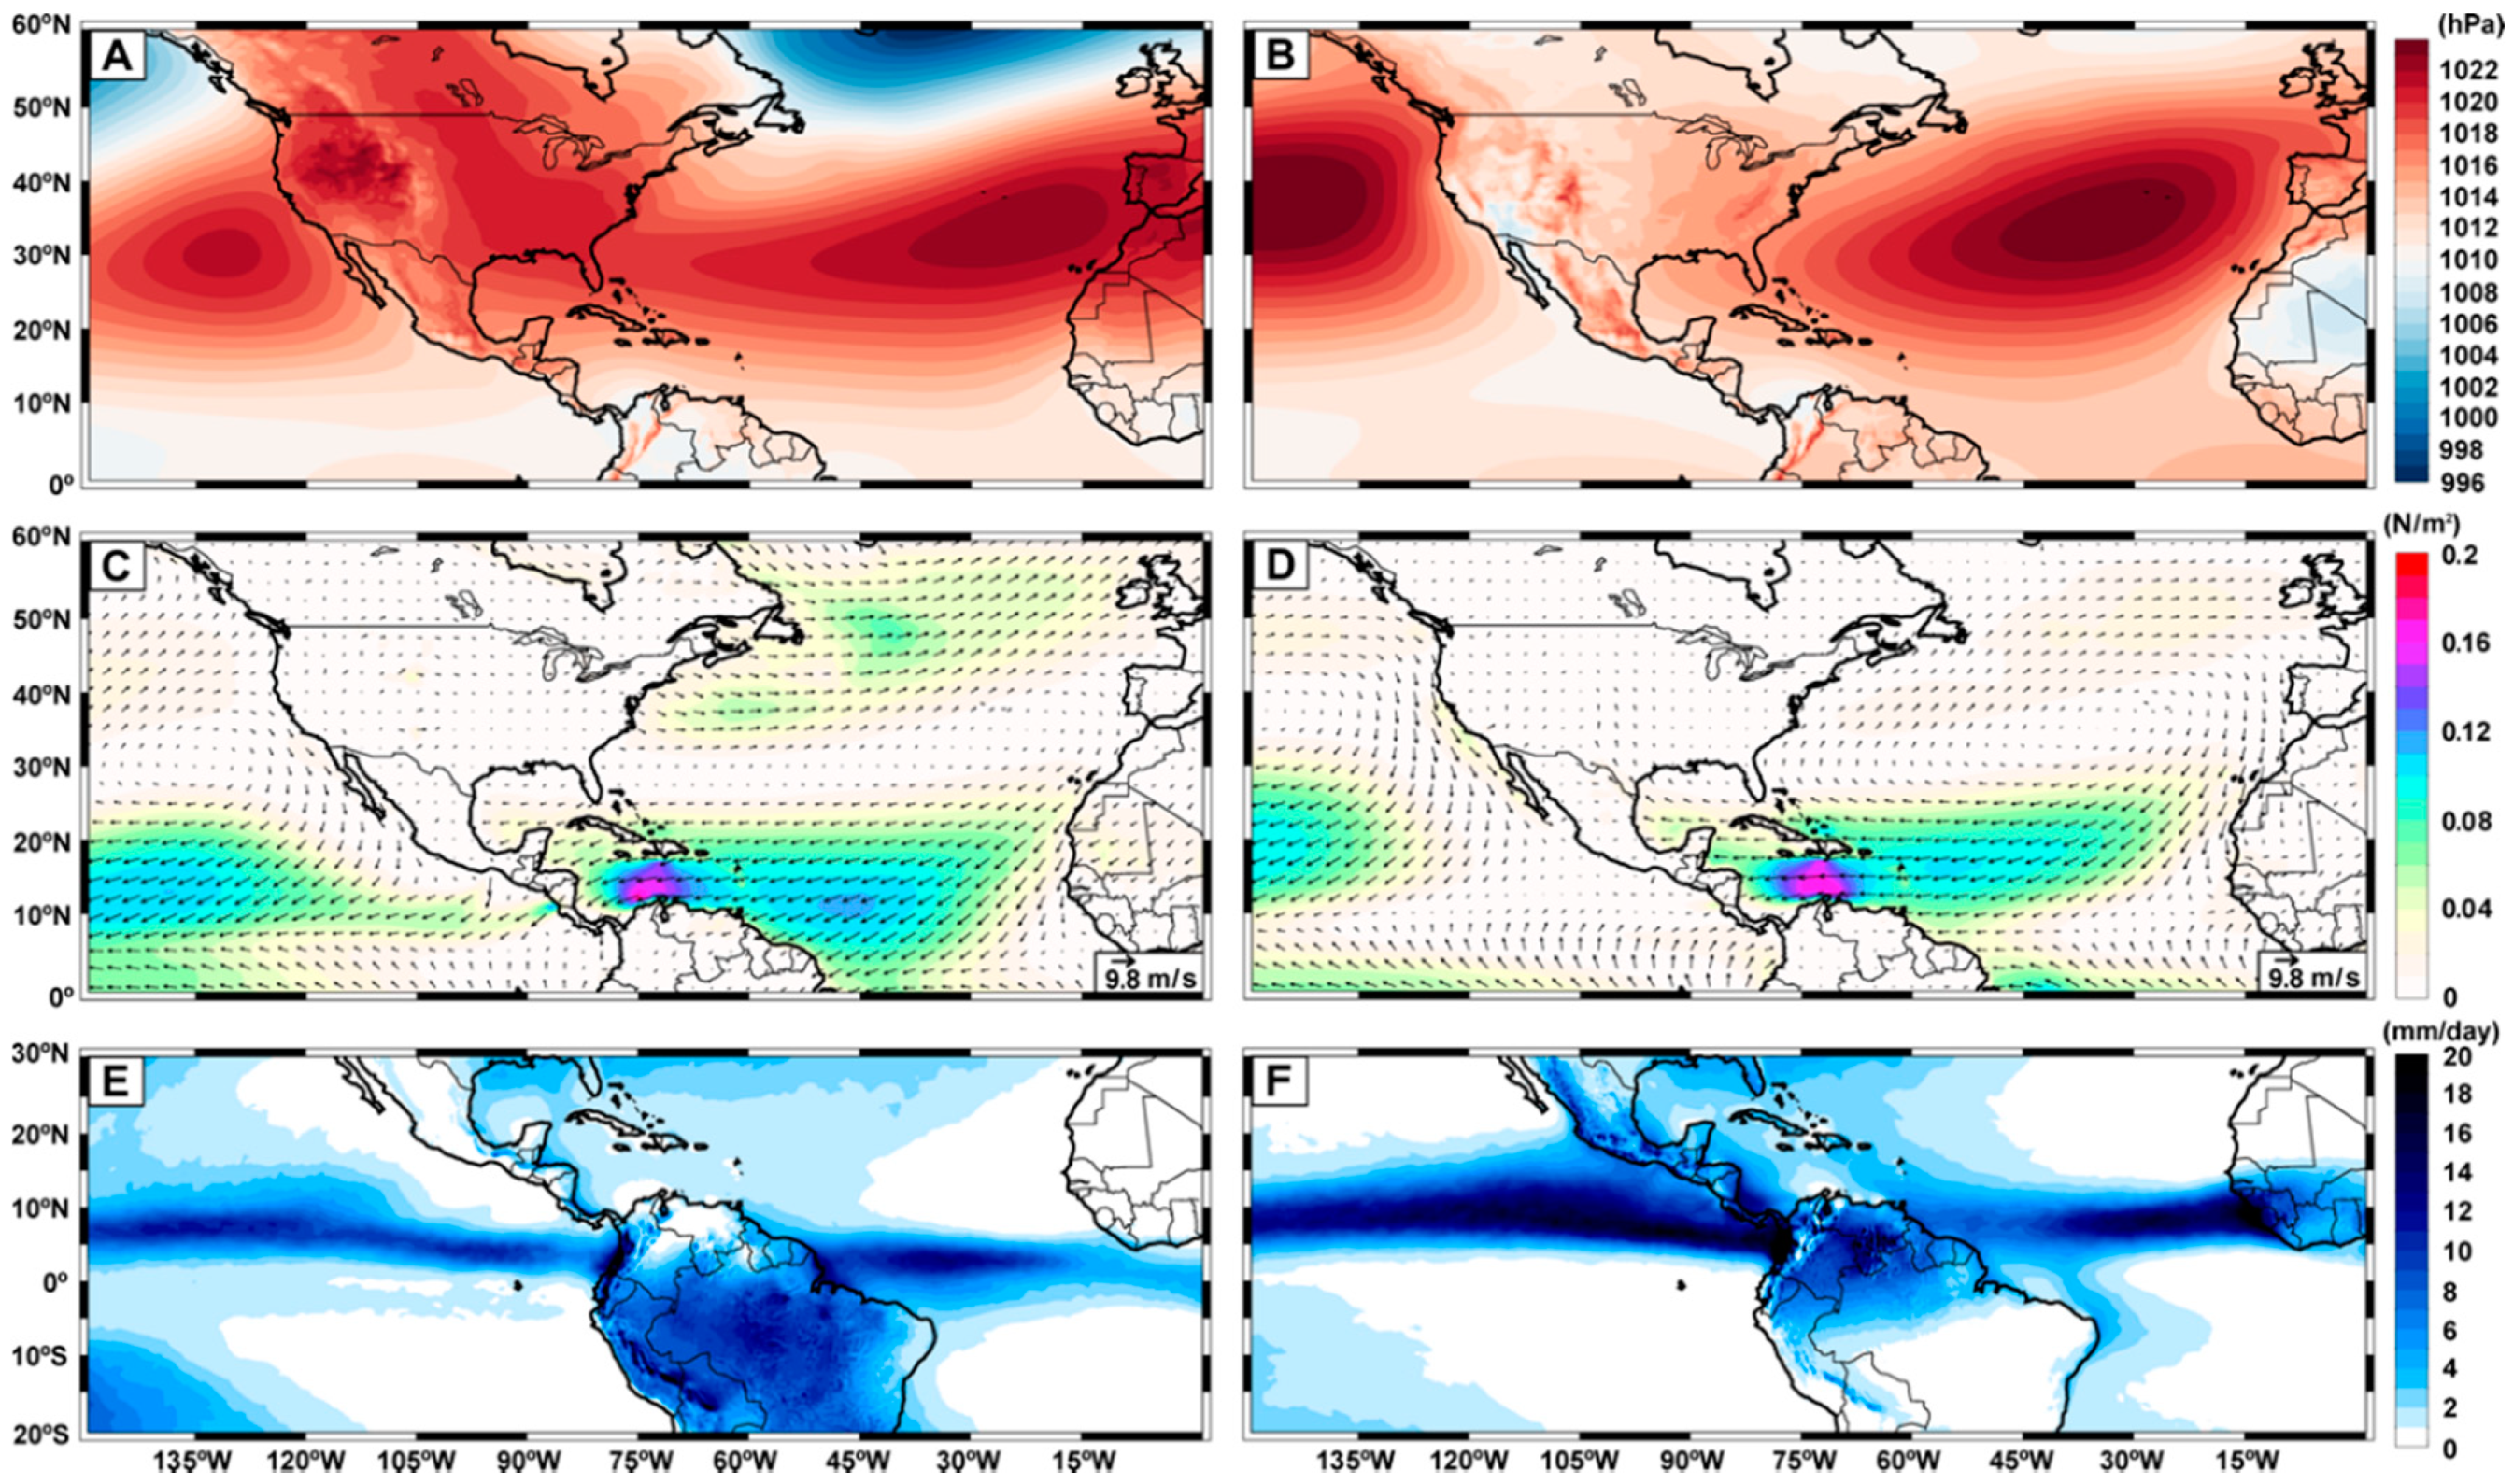 Warm pool ocean heat content regulates ocean–continent moisture transport